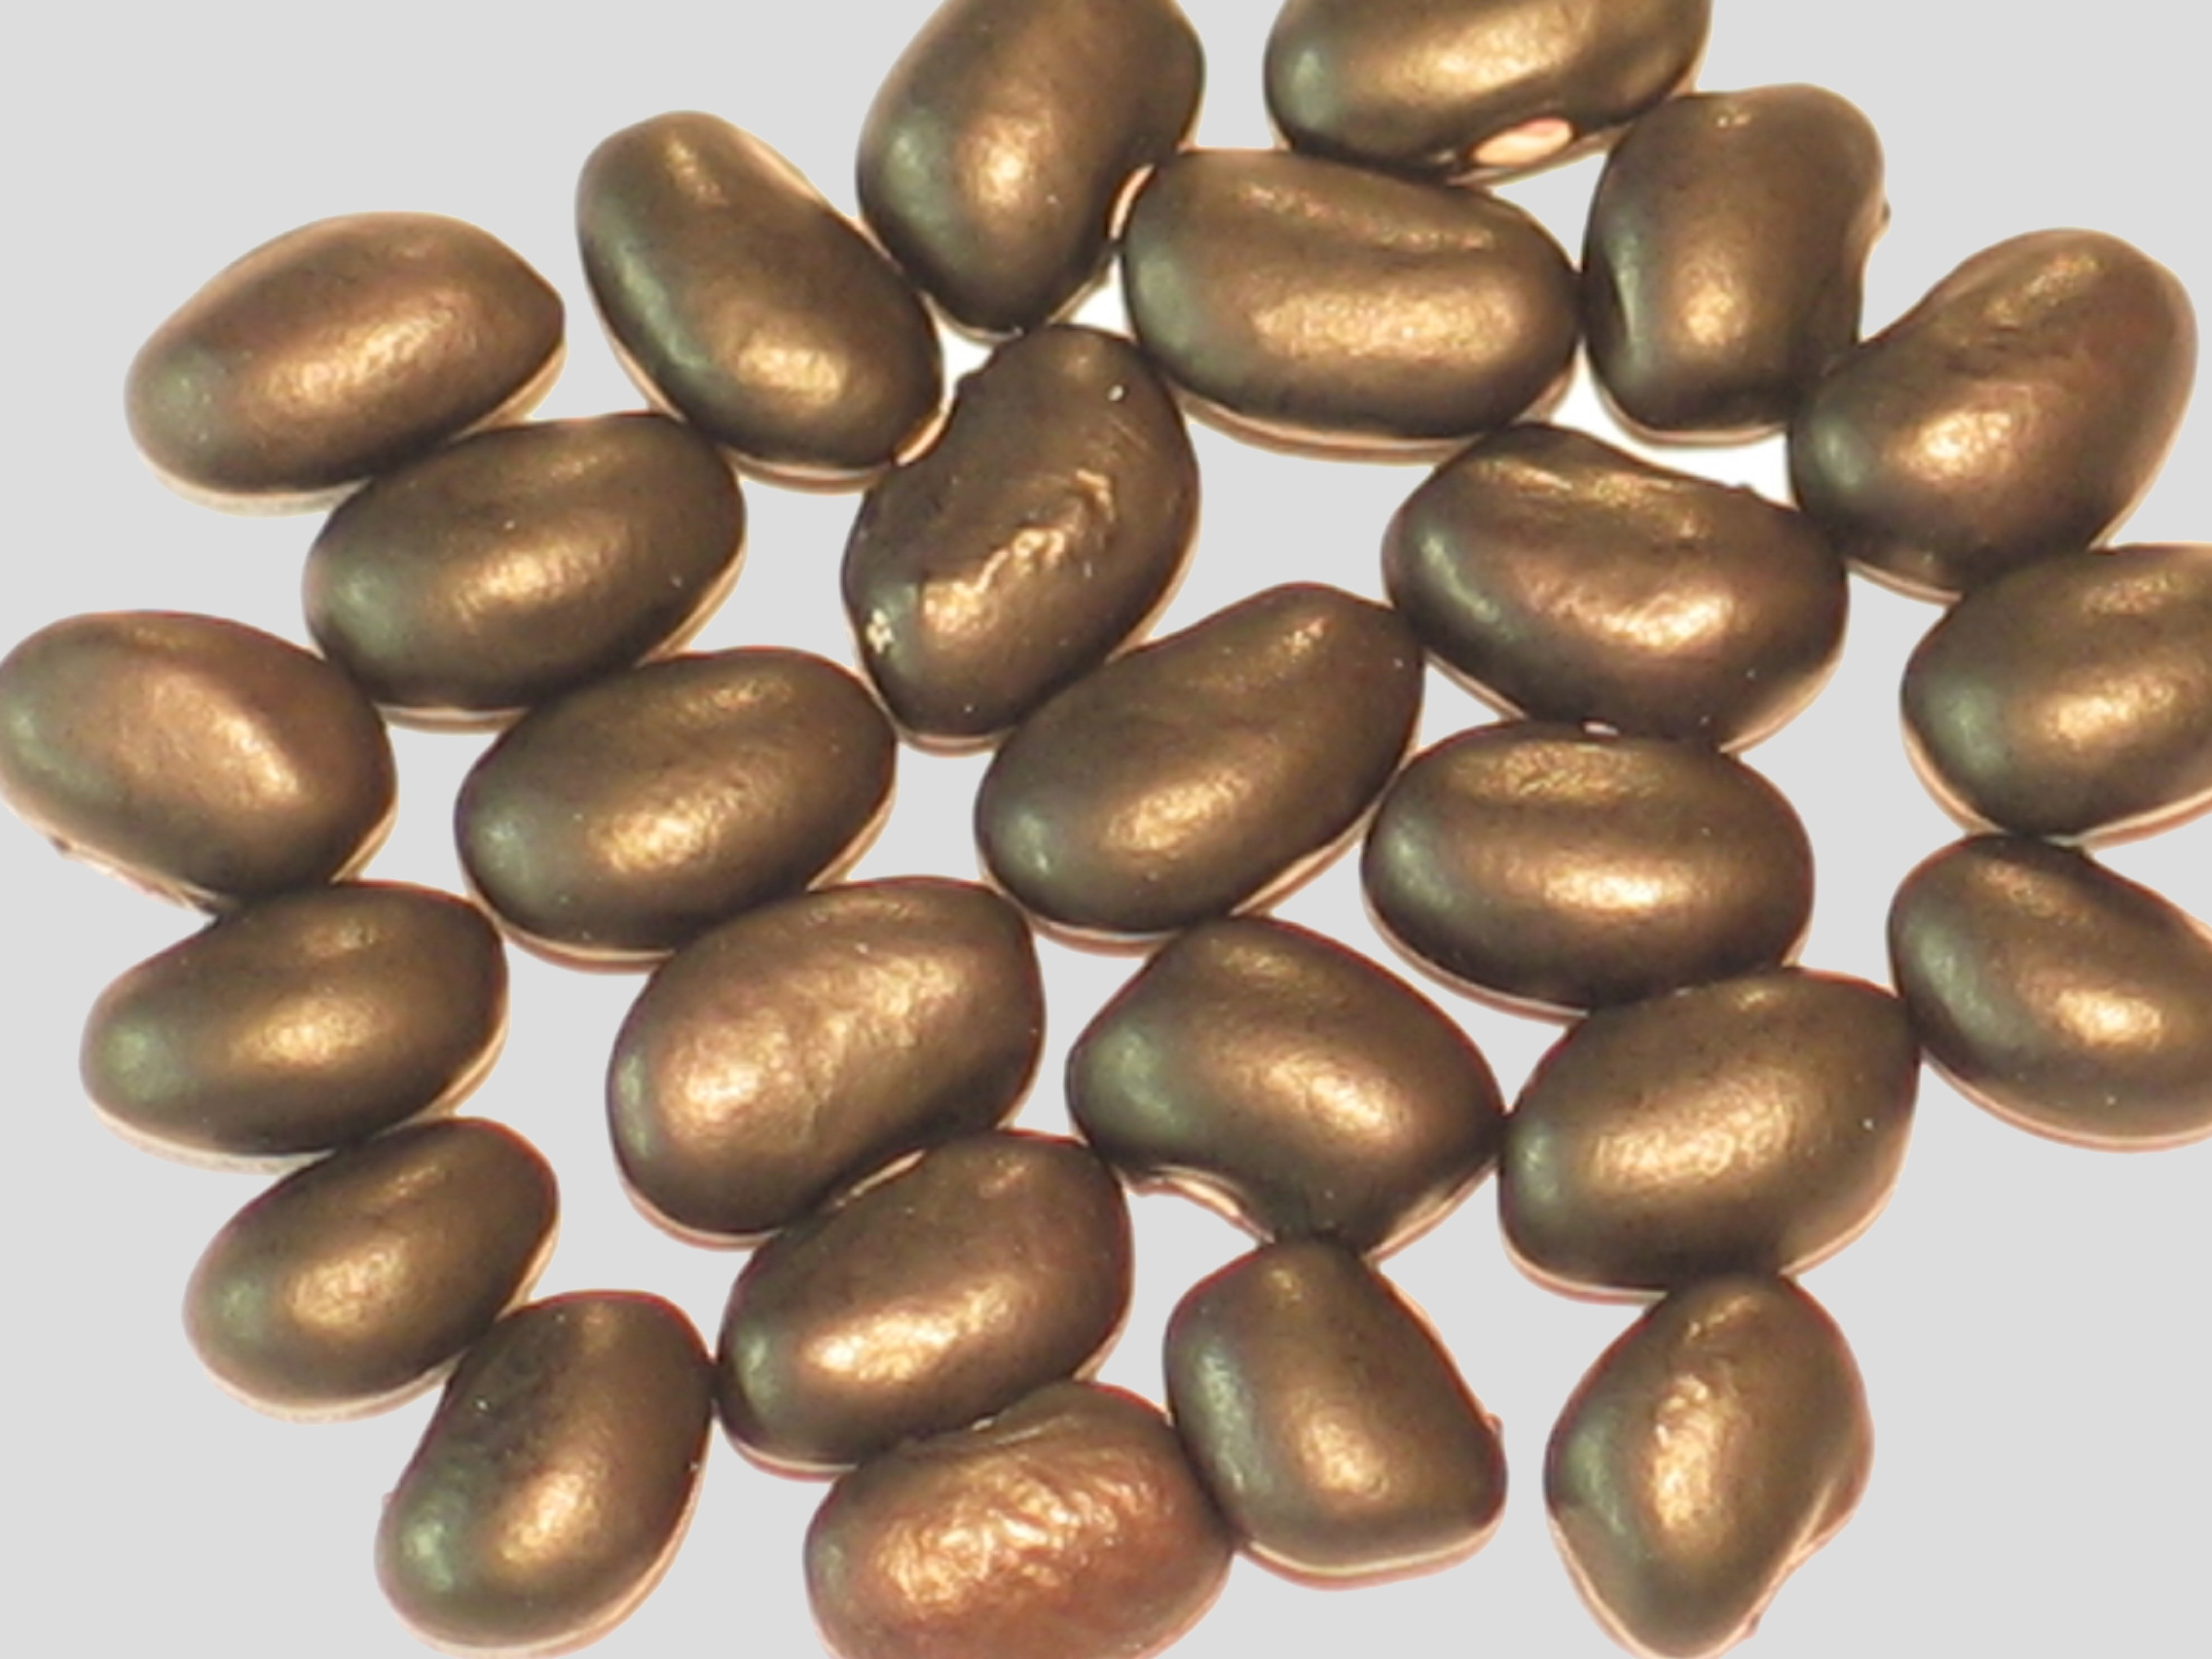 image of Feijao Preto Brasileito beans